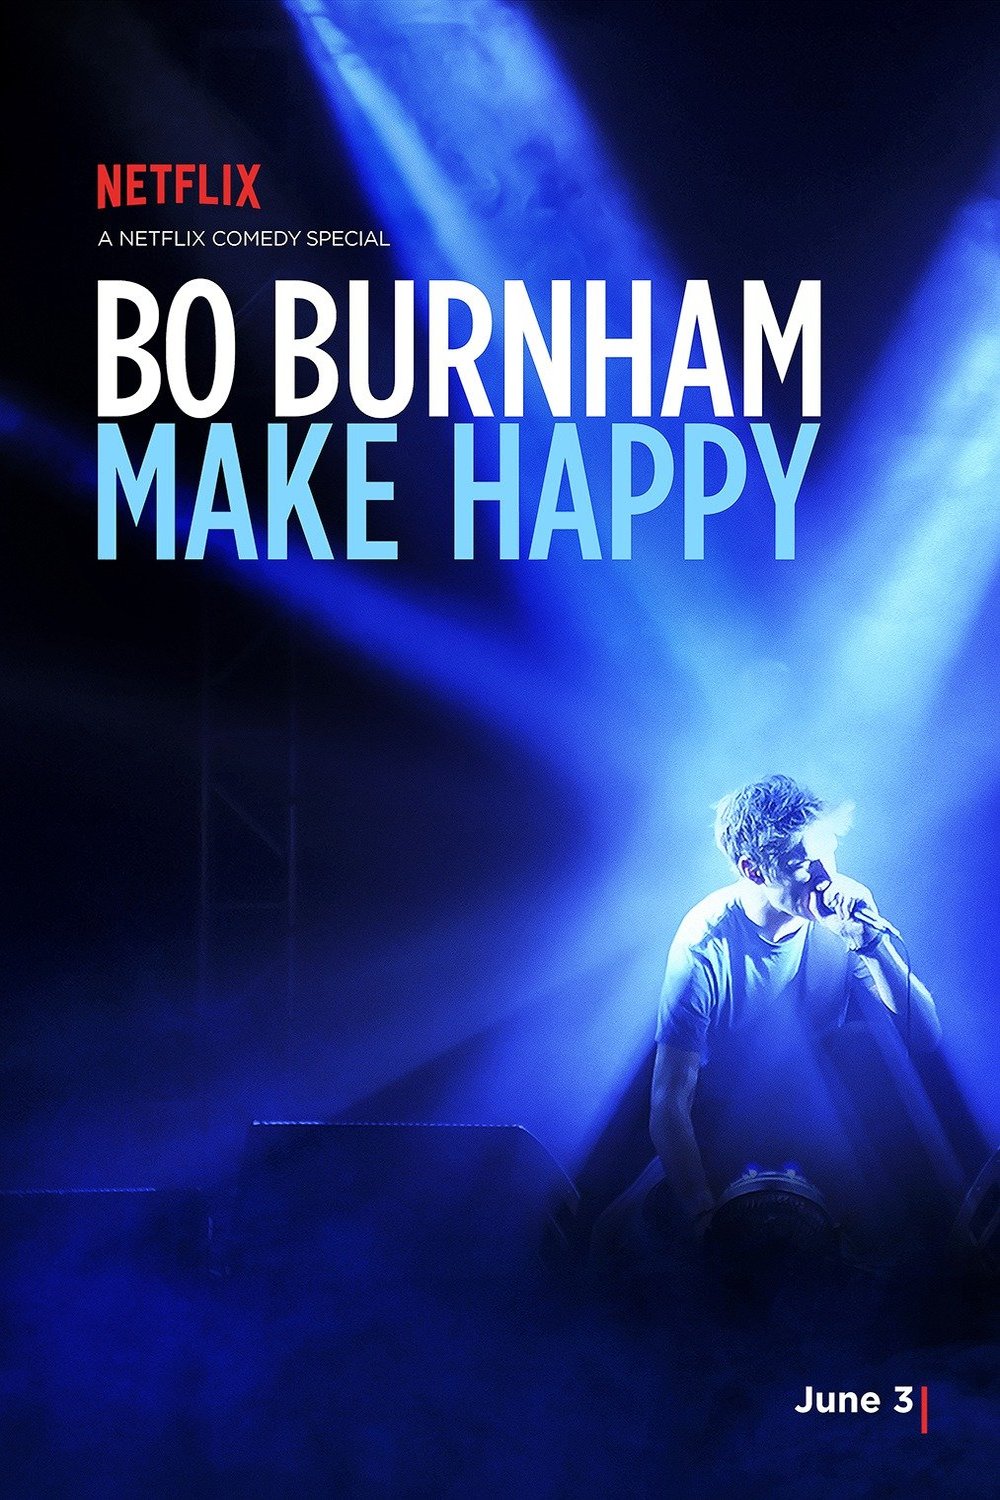 Poster of the movie Bo Burnham: Make Happy